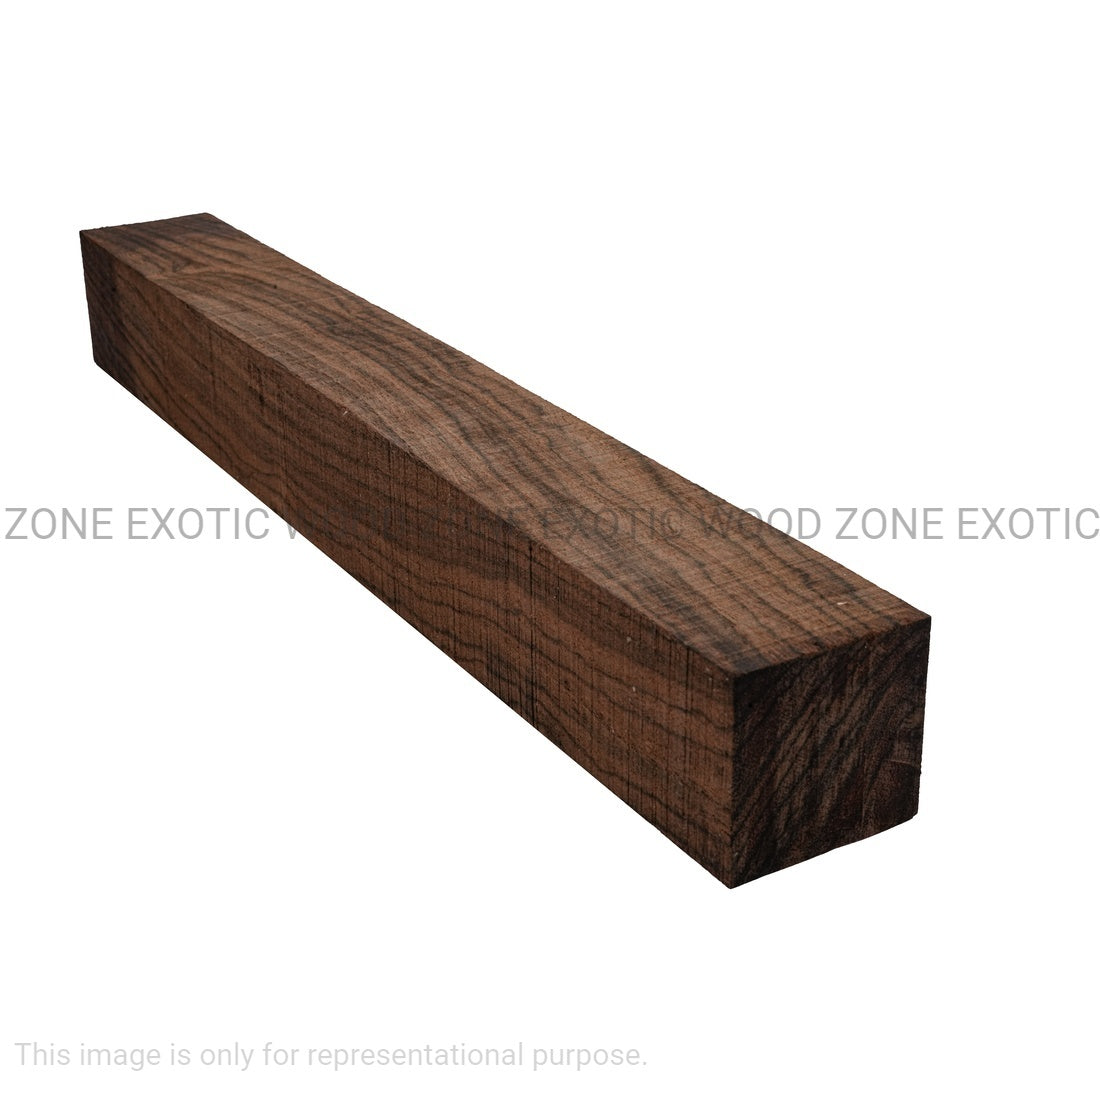 Pack of 6, Bocote Turning Blanks/Hobbywood Blanks 1” x 1” x 12” - Exotic Wood Zone - Buy online Across USA 